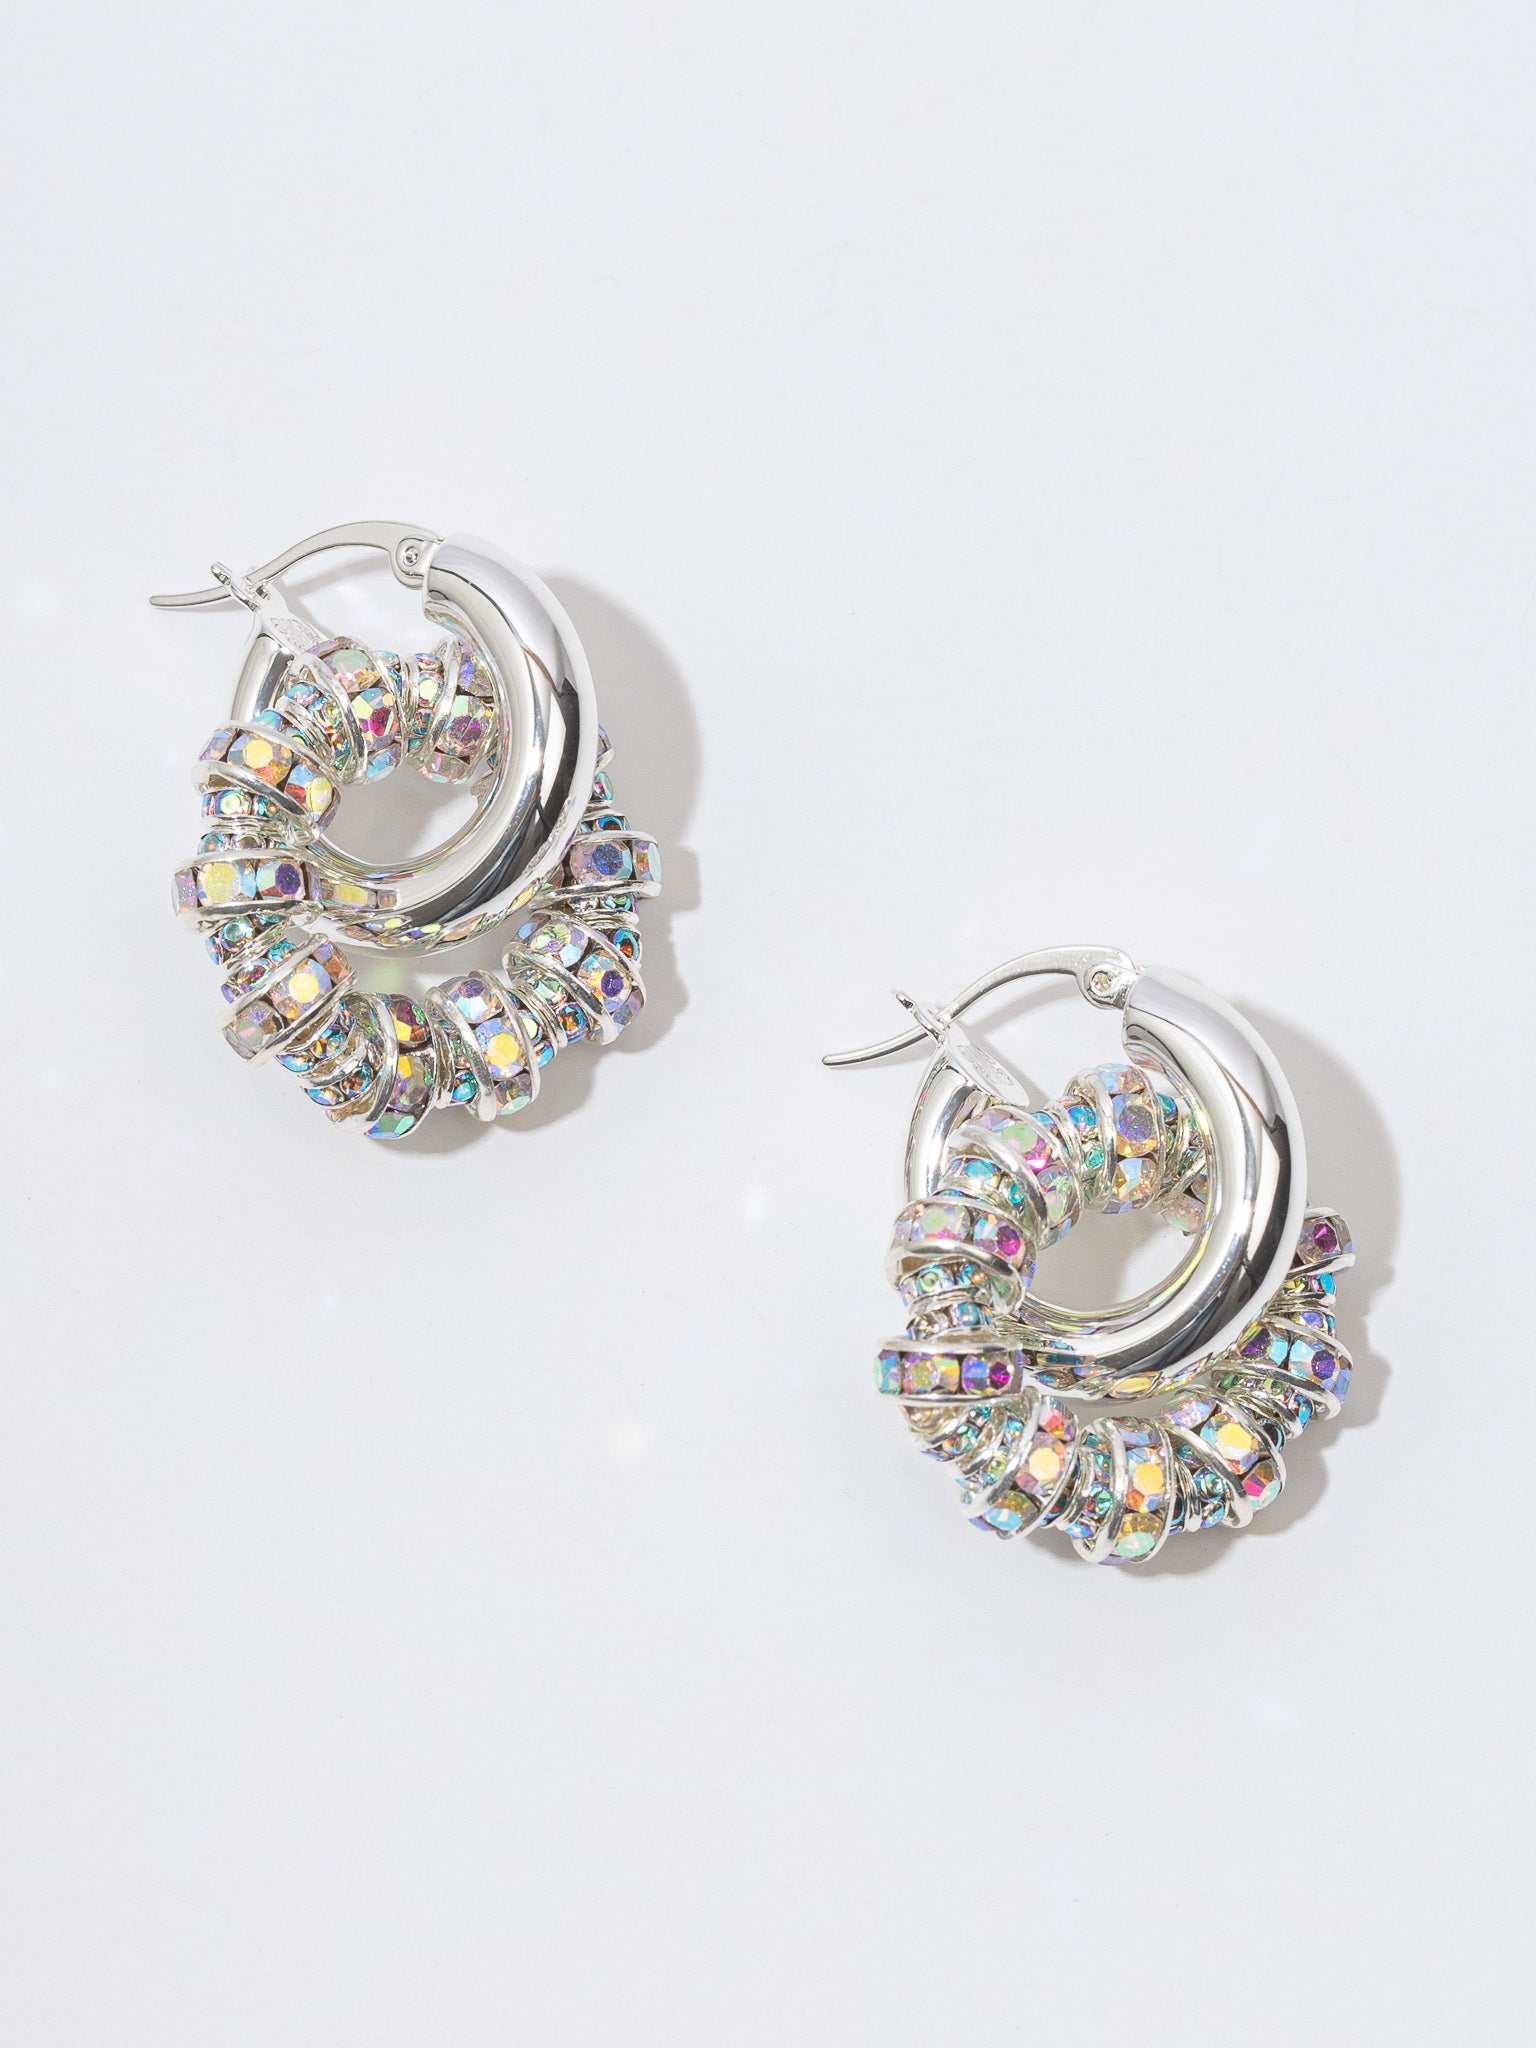 Les Créoles Petites Earrings in Silver